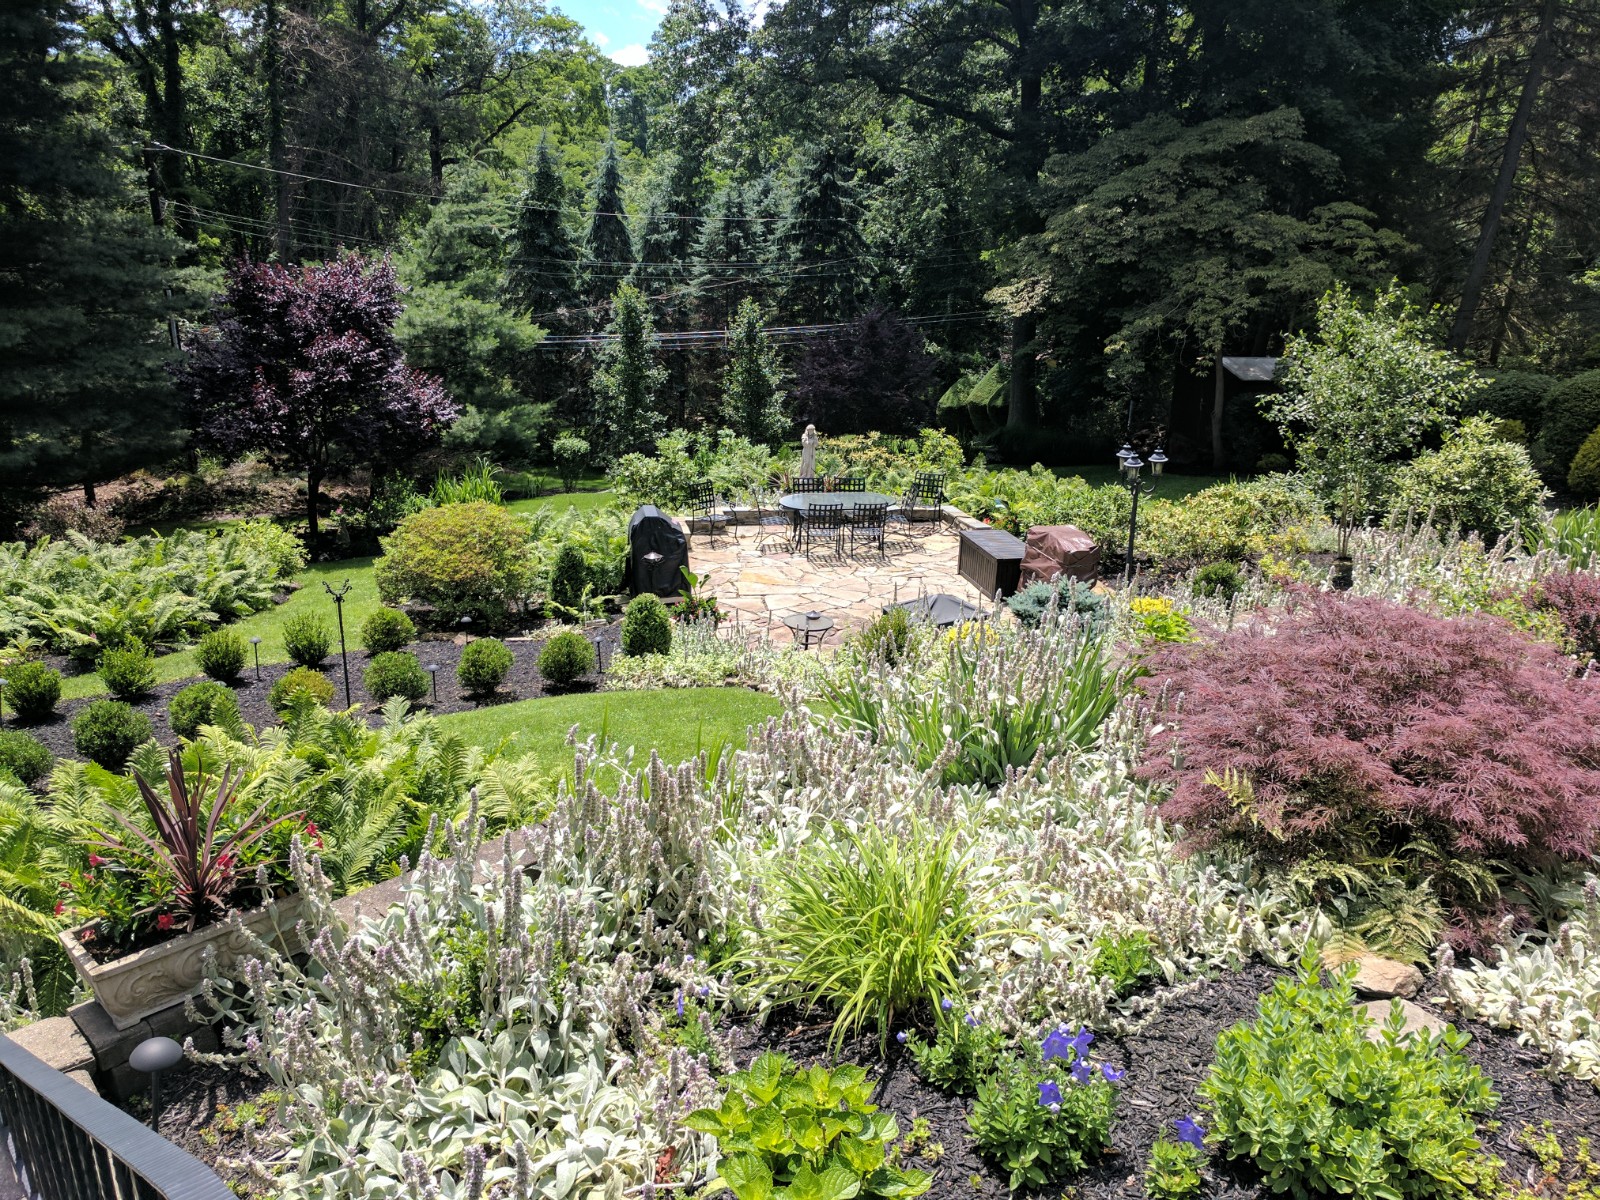 Town and Country Garden Tour - Pittsburgh Botanic Garden